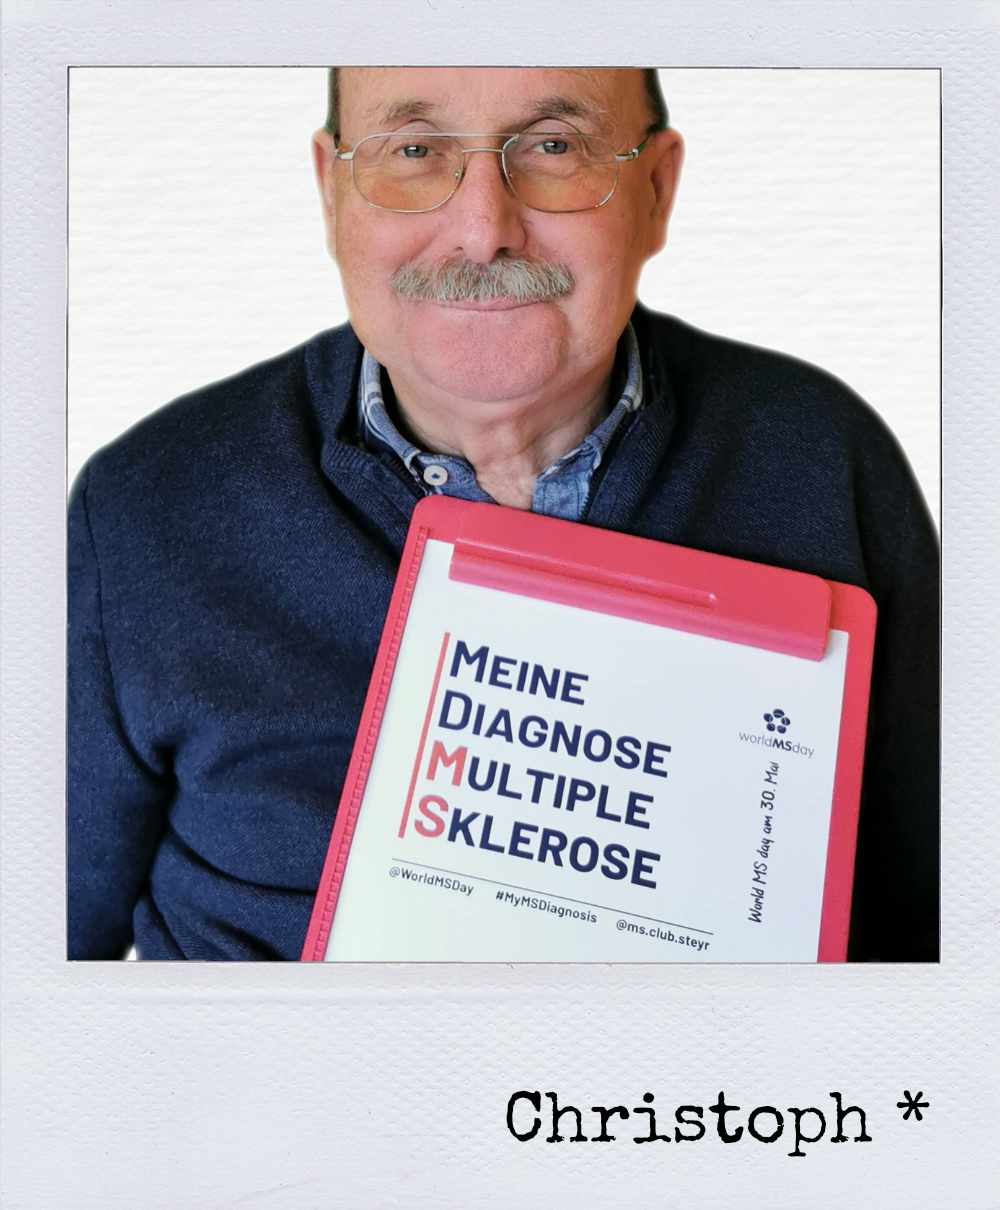 Christoph Meine MS Diagnose